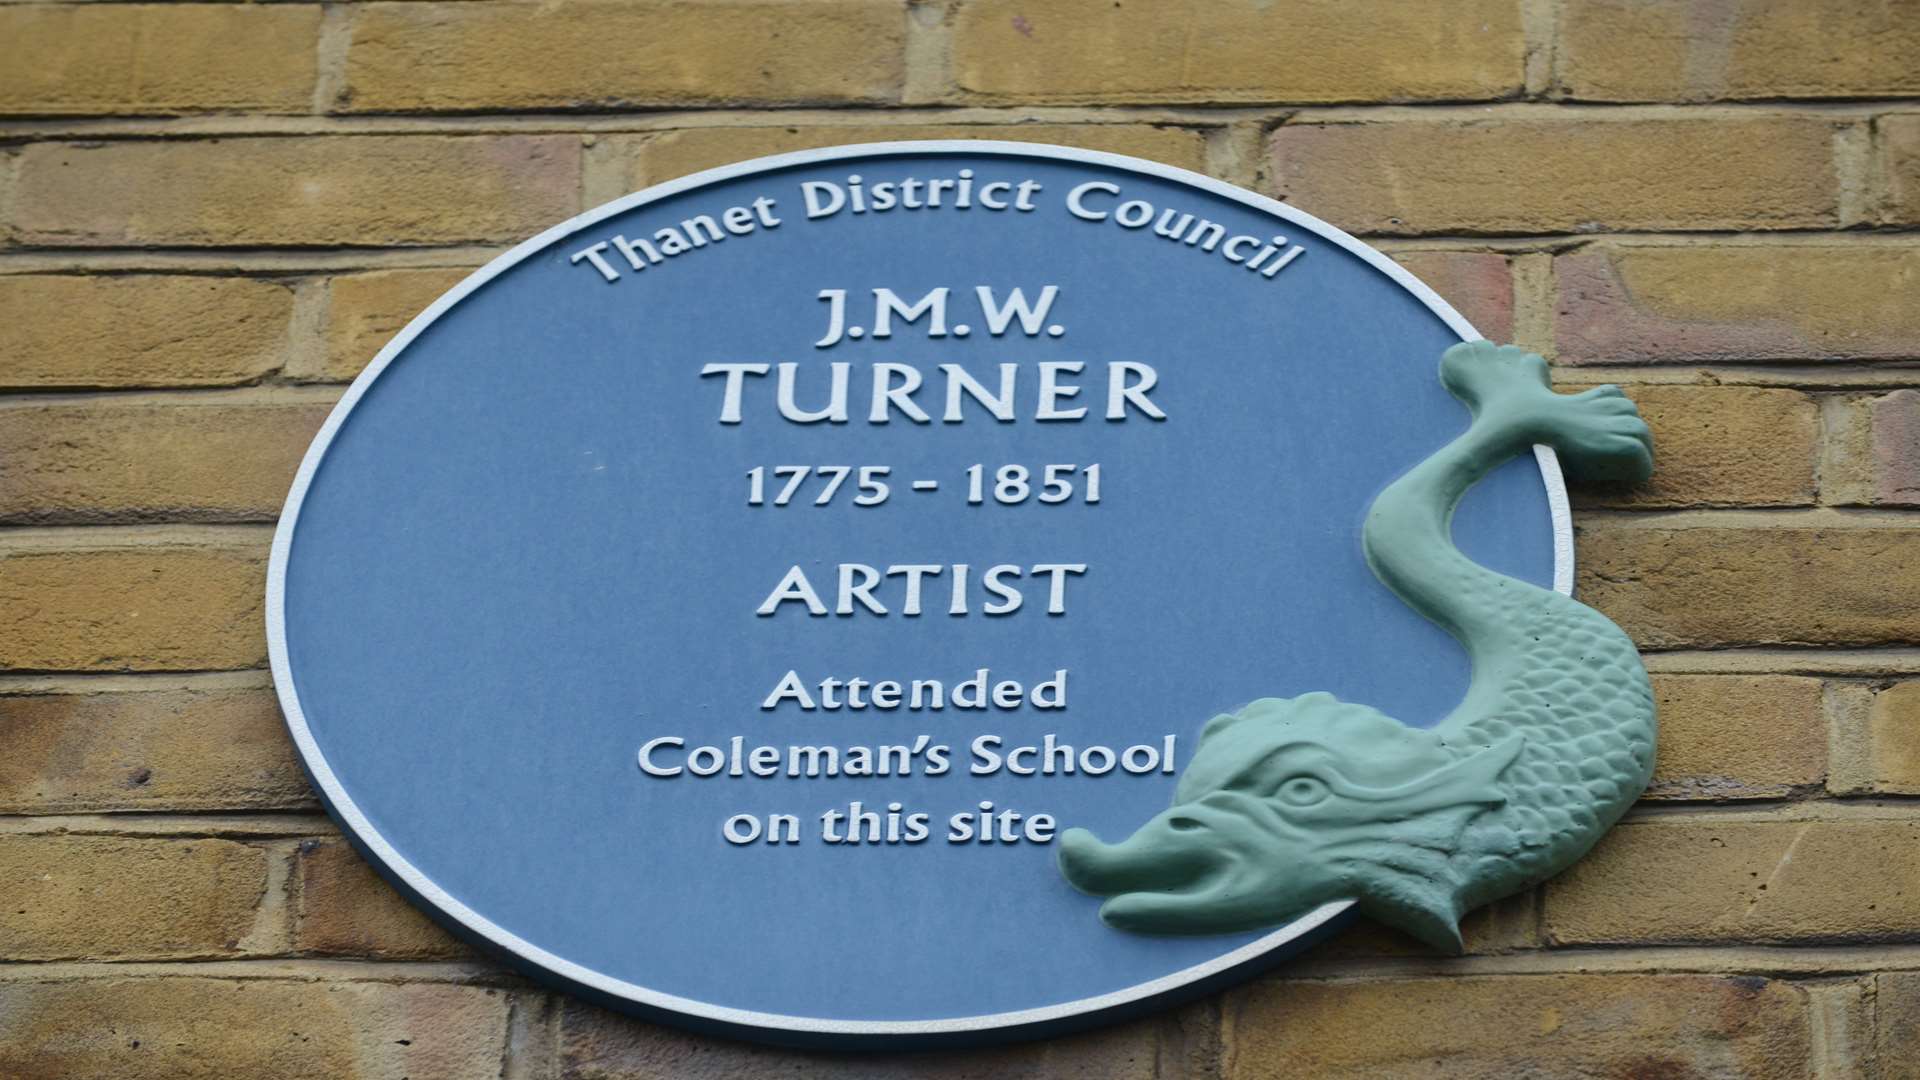 J.M.W. Turner, corner of Love Lane and Hawley Street